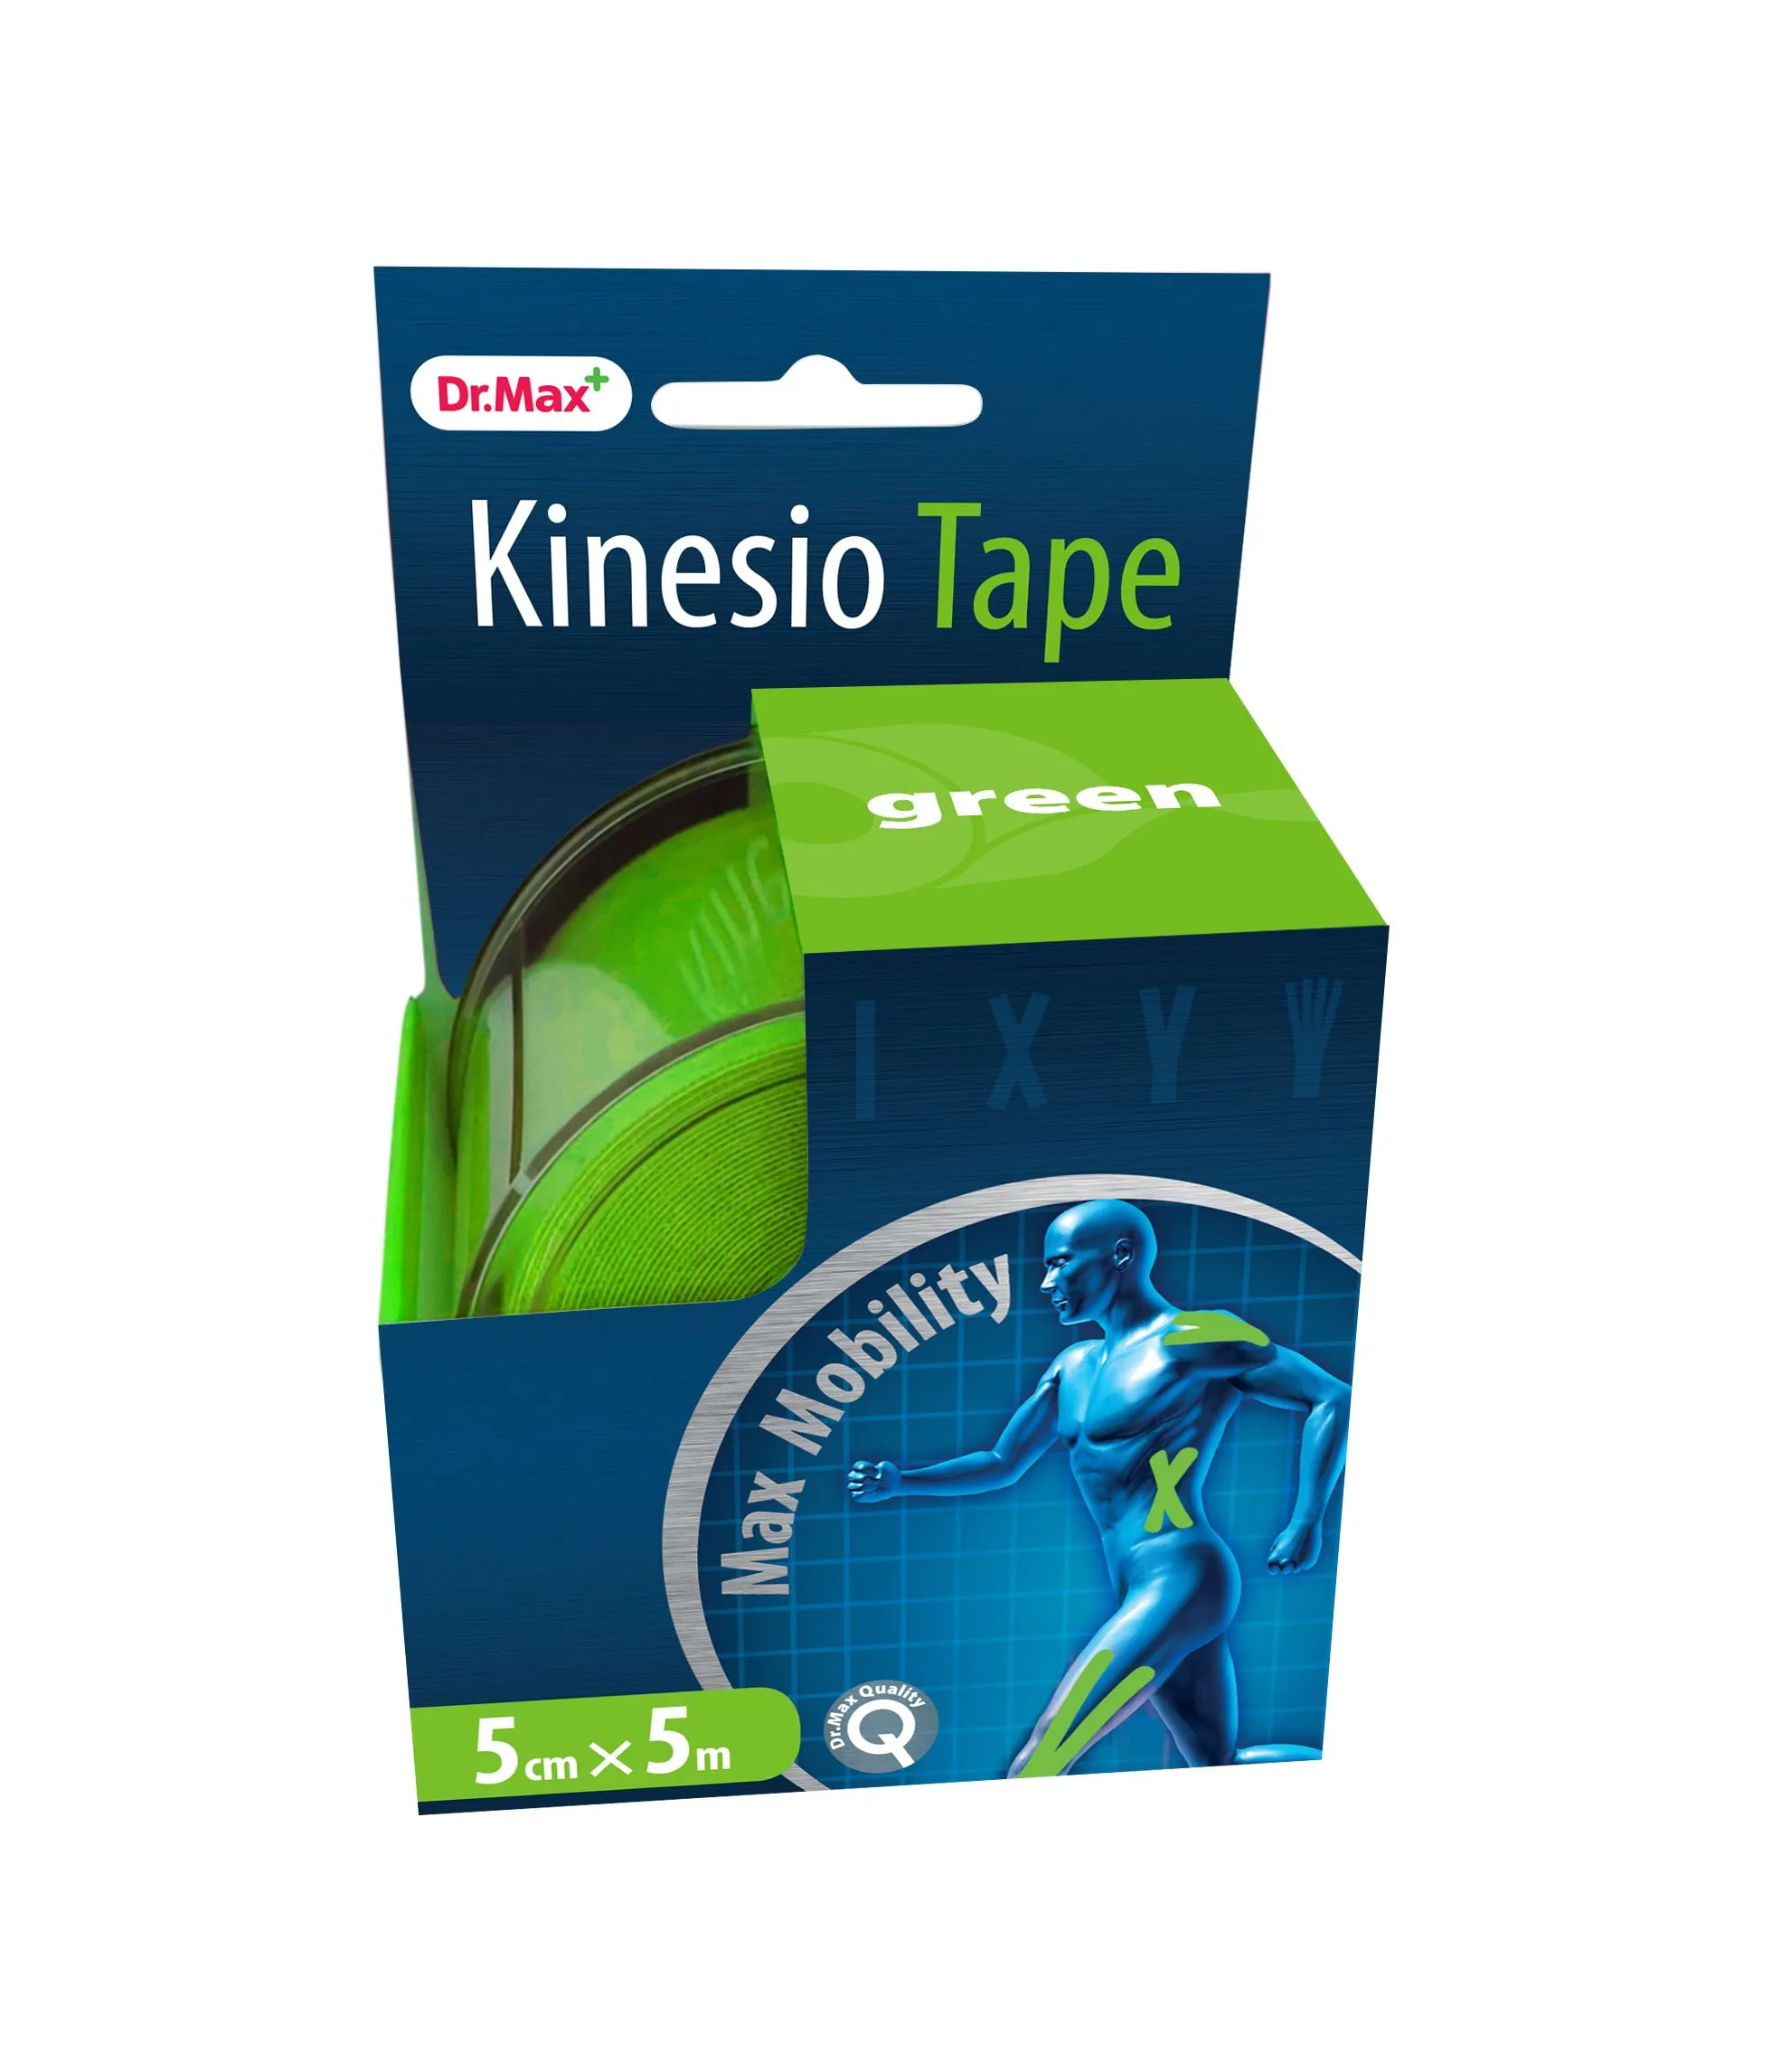 Dr.Max Kinesio Tape green 5cm x 5m